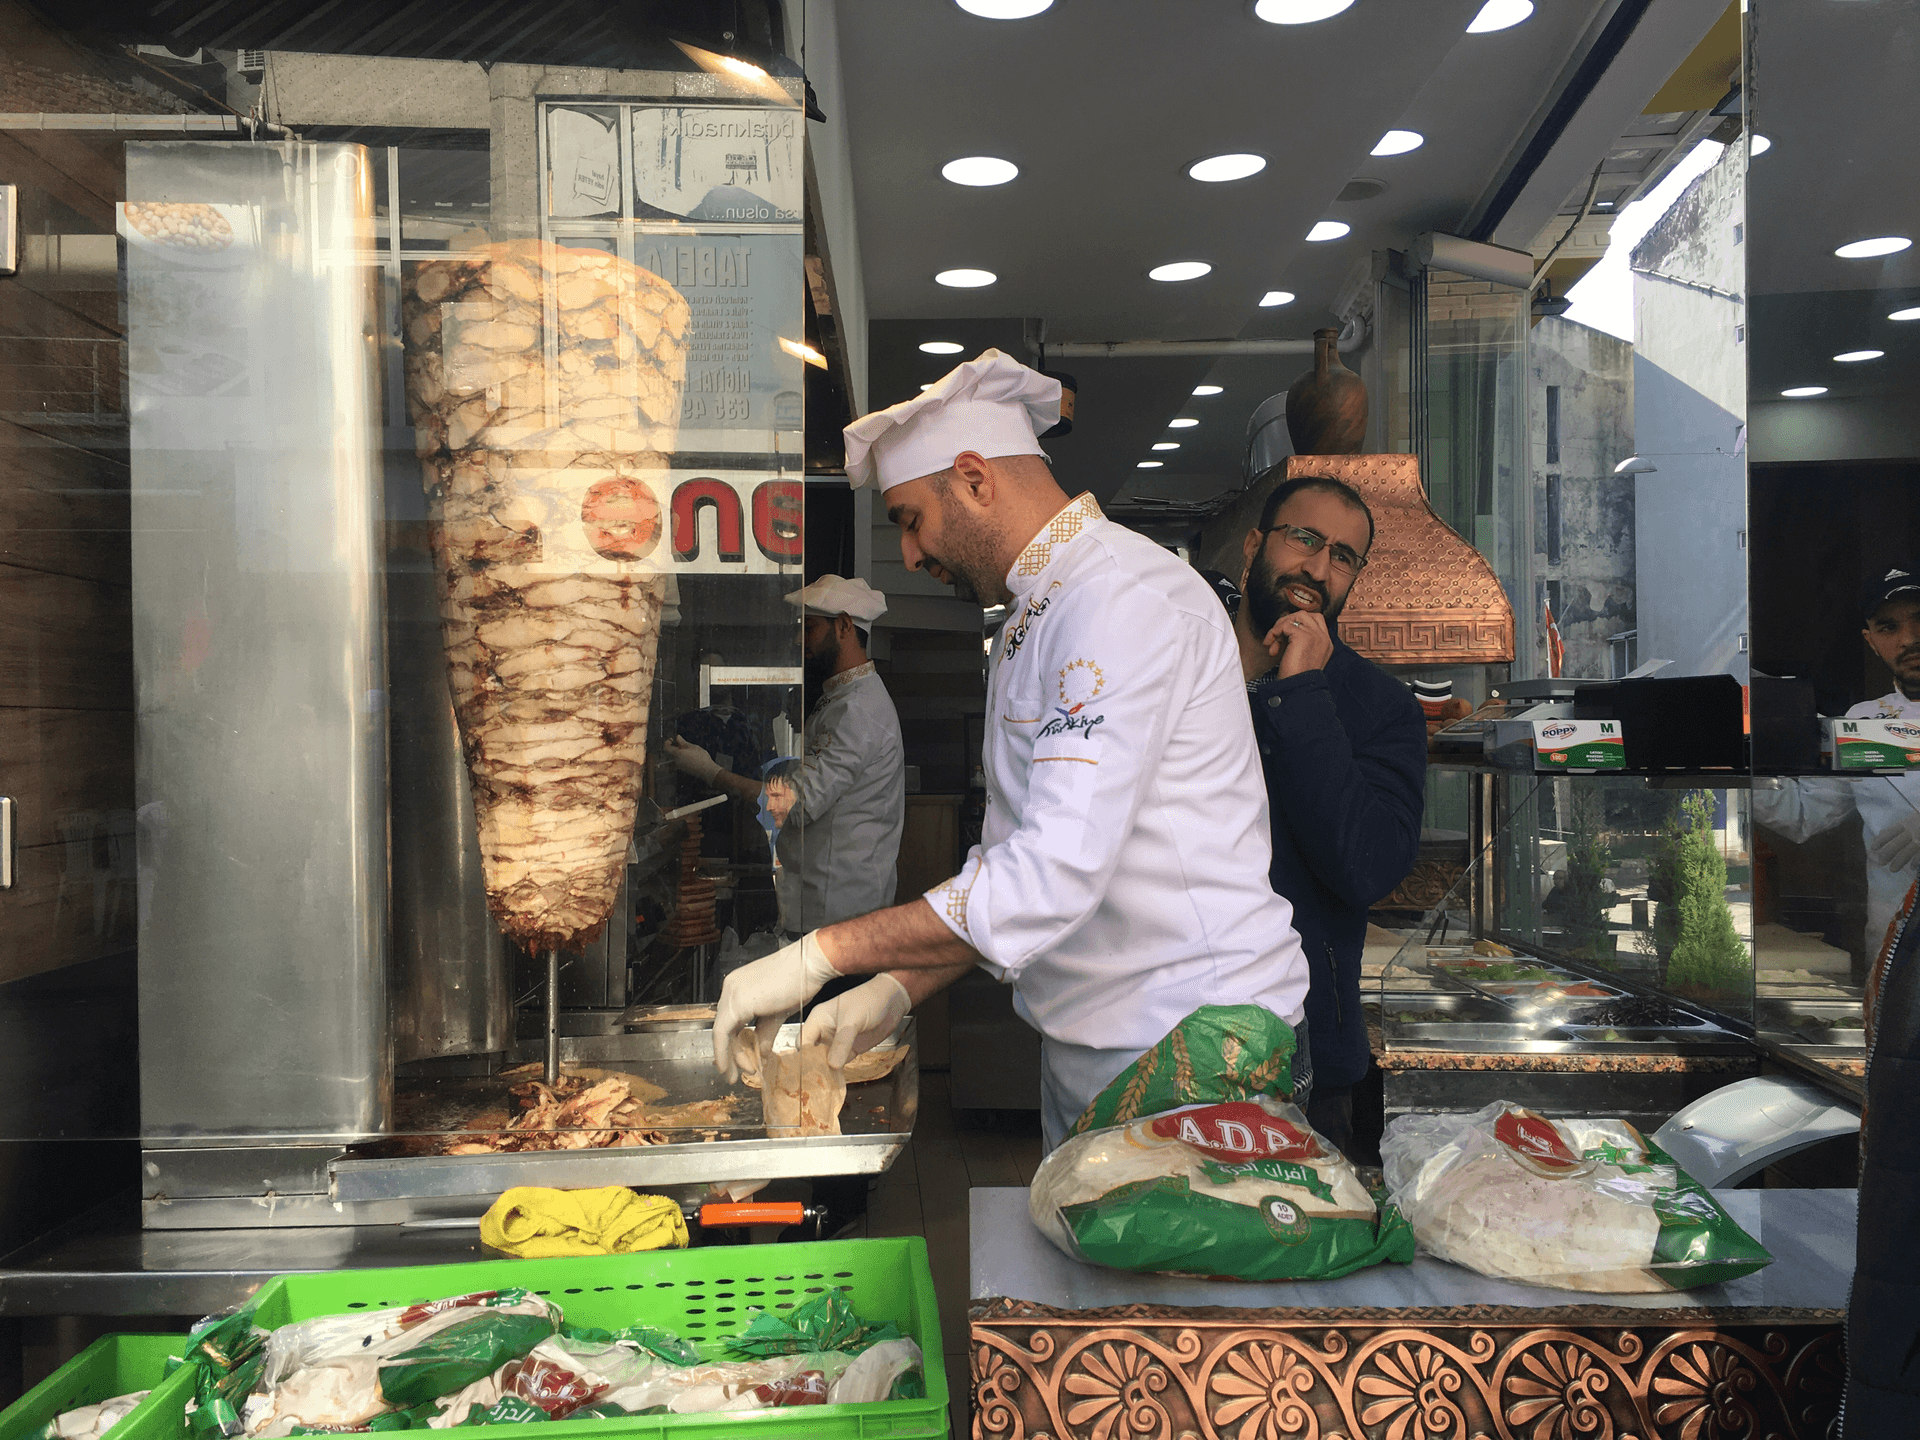 shawarma